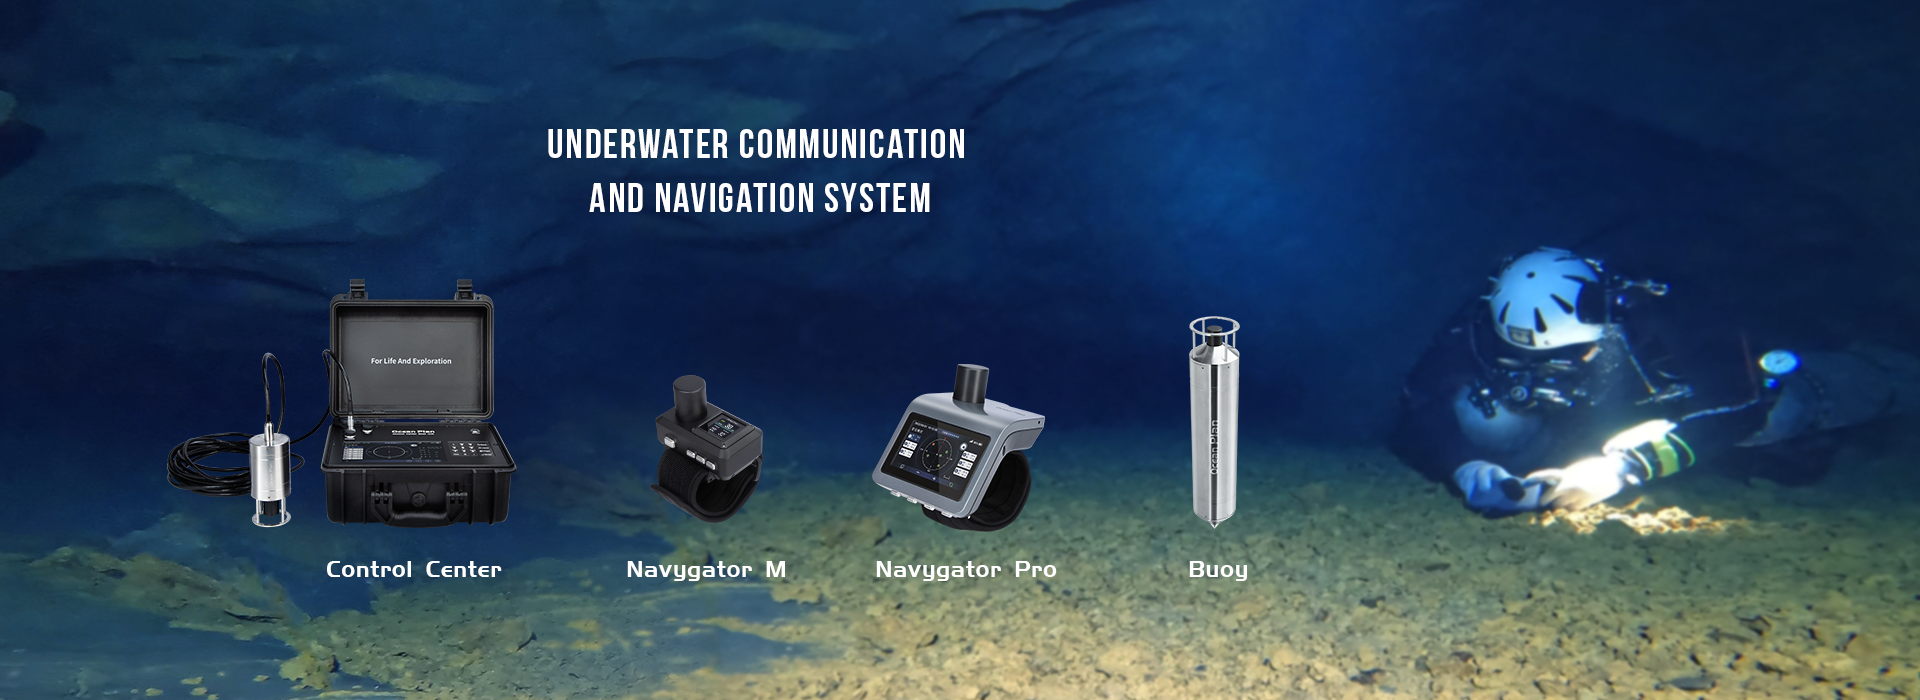 Underwater navigation and underwater communication system